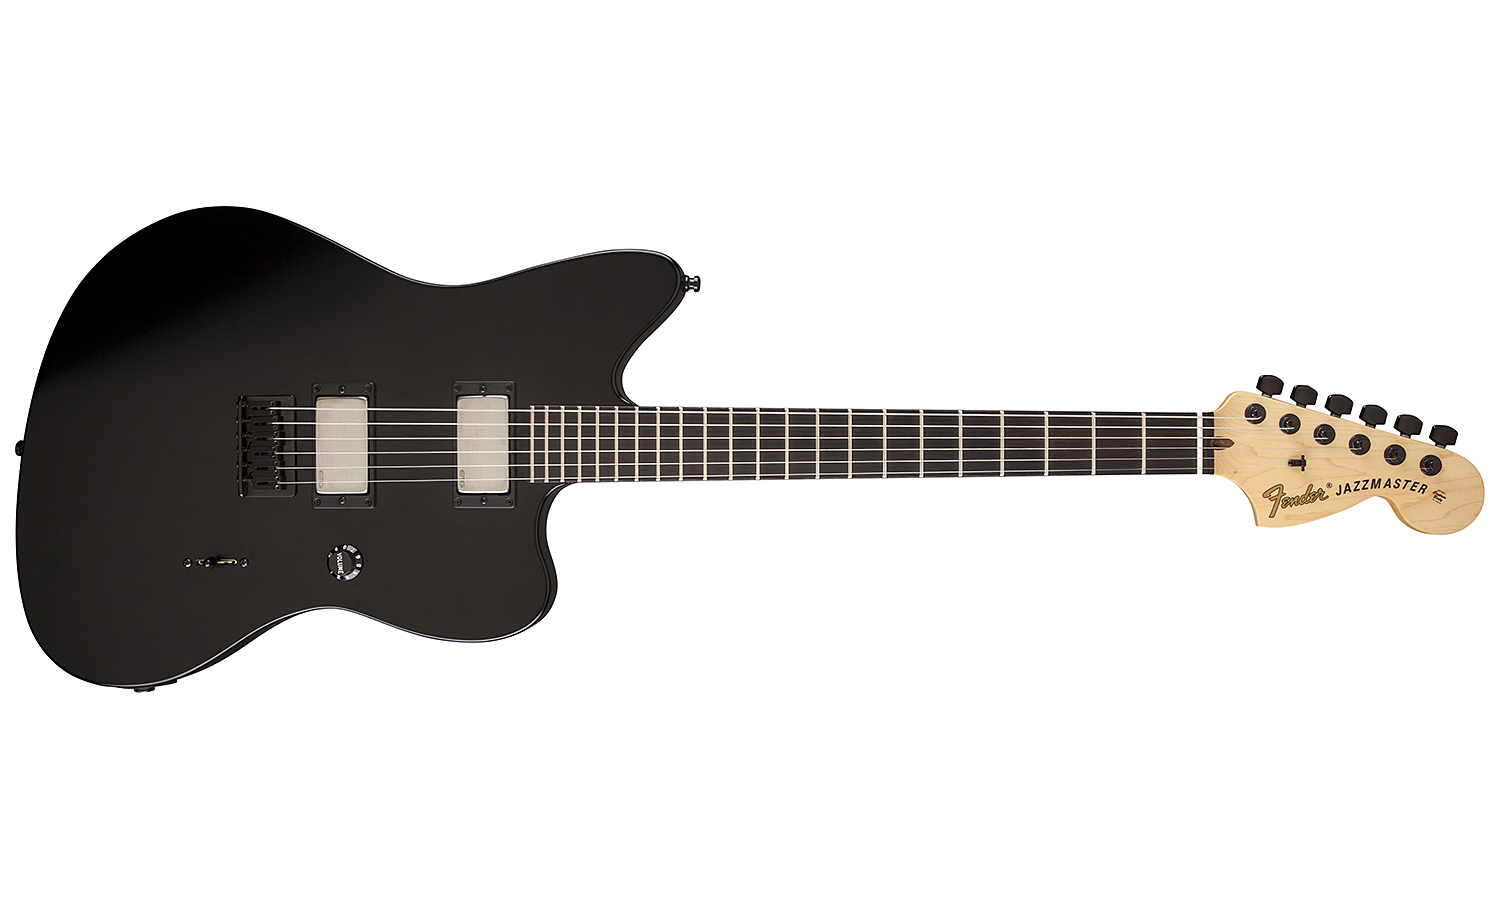 Fender Jim Root Jazzmaster Usa 2h Emg Ht Eb - Flat Black - Retro-rock elektrische gitaar - Variation 1